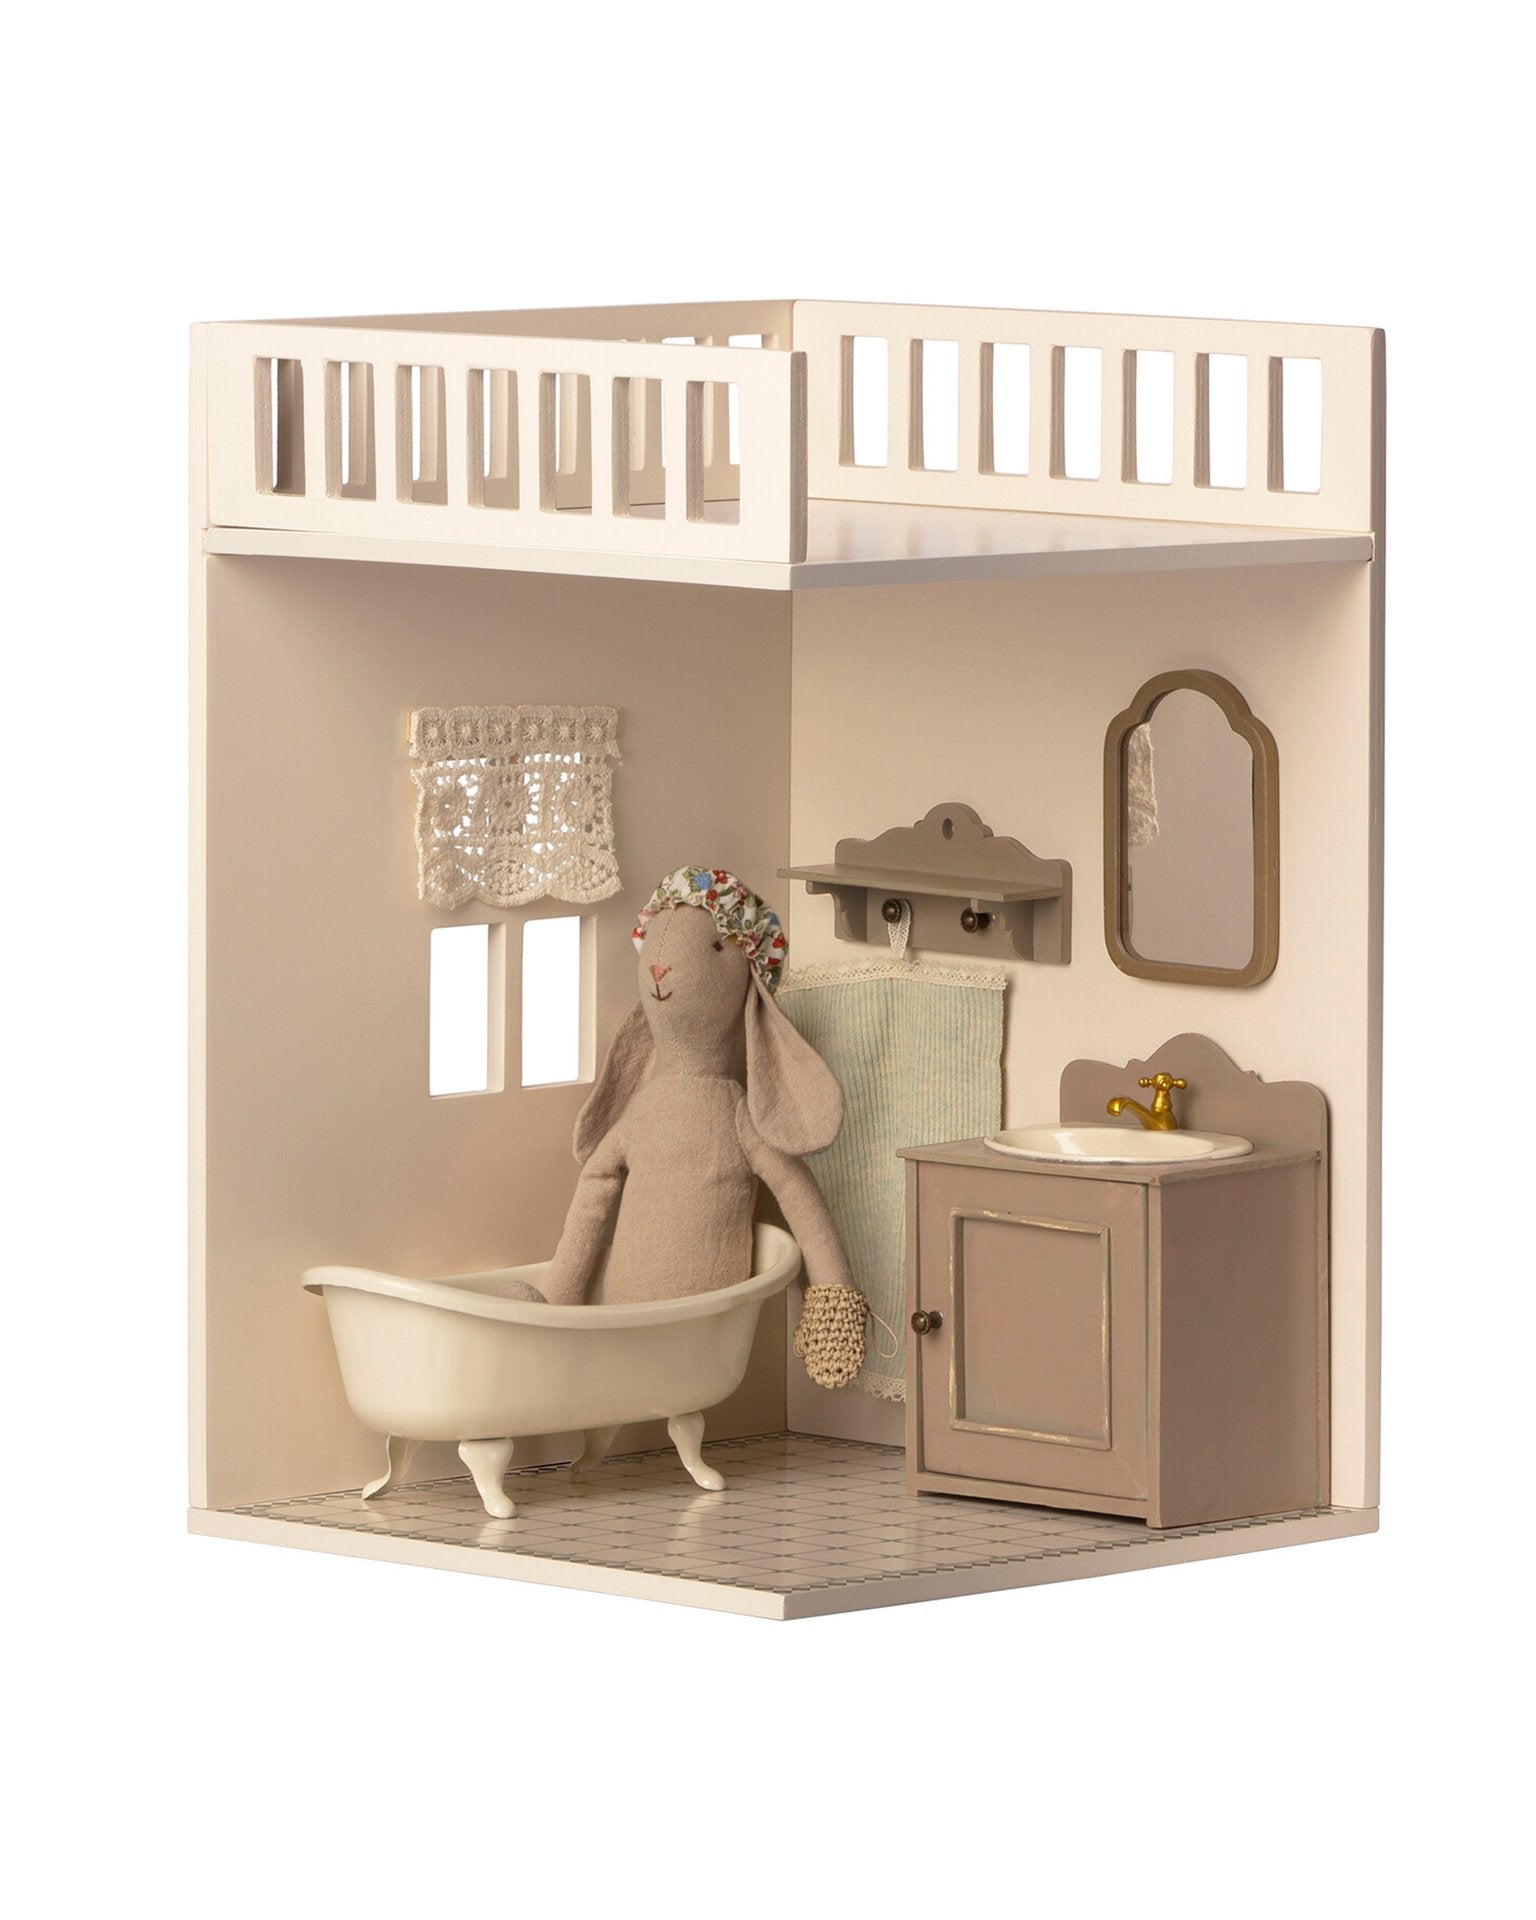 Little maileg play house of miniature bathroom